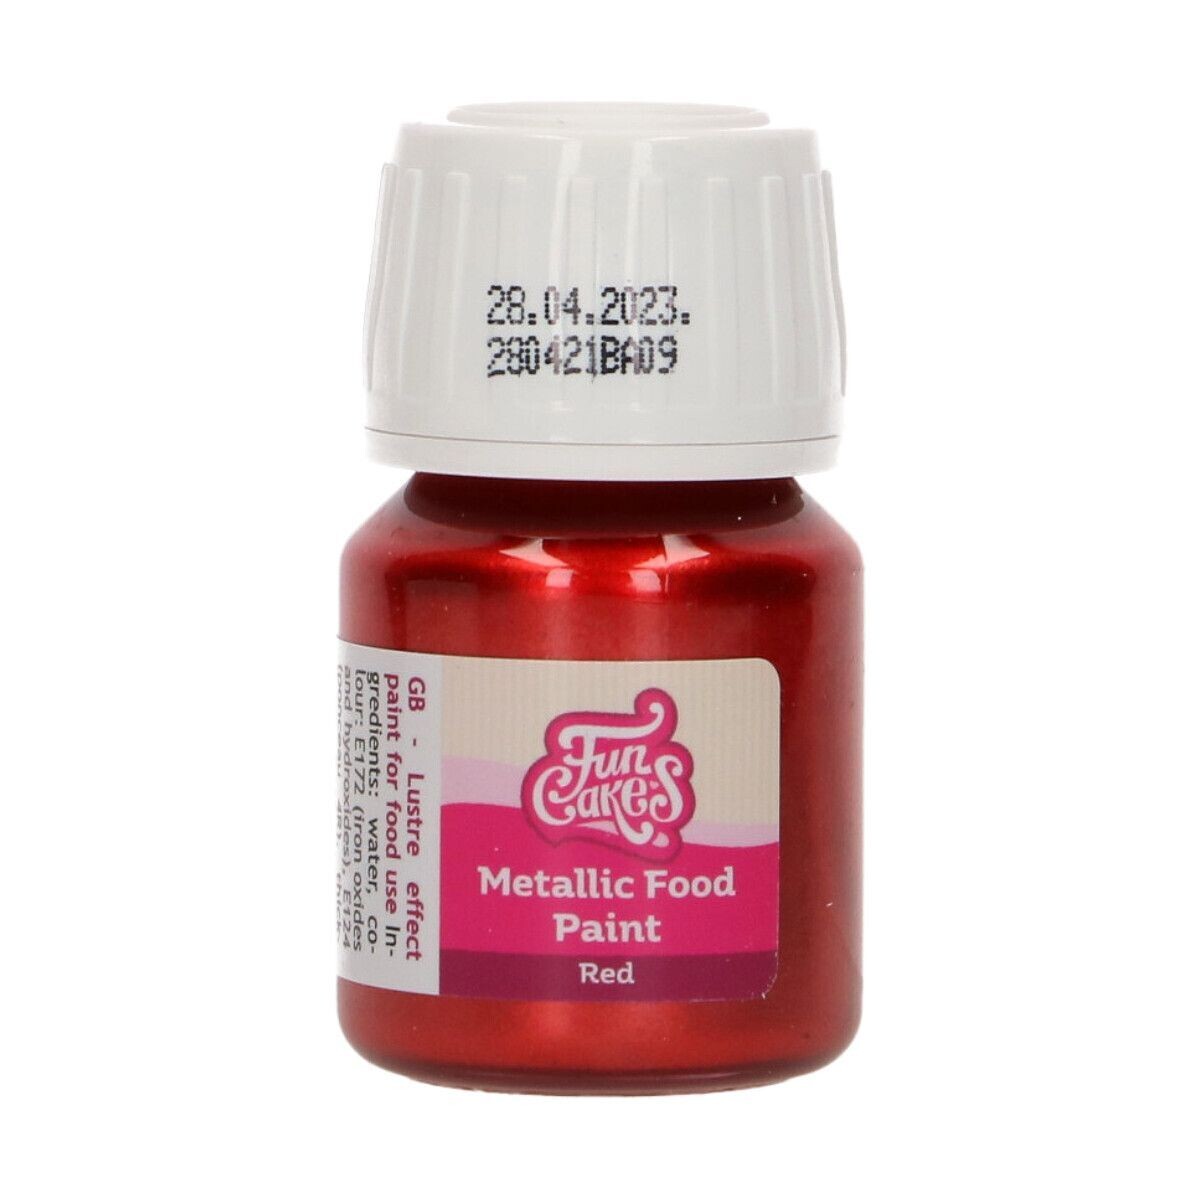 FunCakes Edible Metallic Food Paints -RED -Μεταλλικό Βρώσιμο Χρώμα Ζωγραφικής - Κόκκινο  30ml